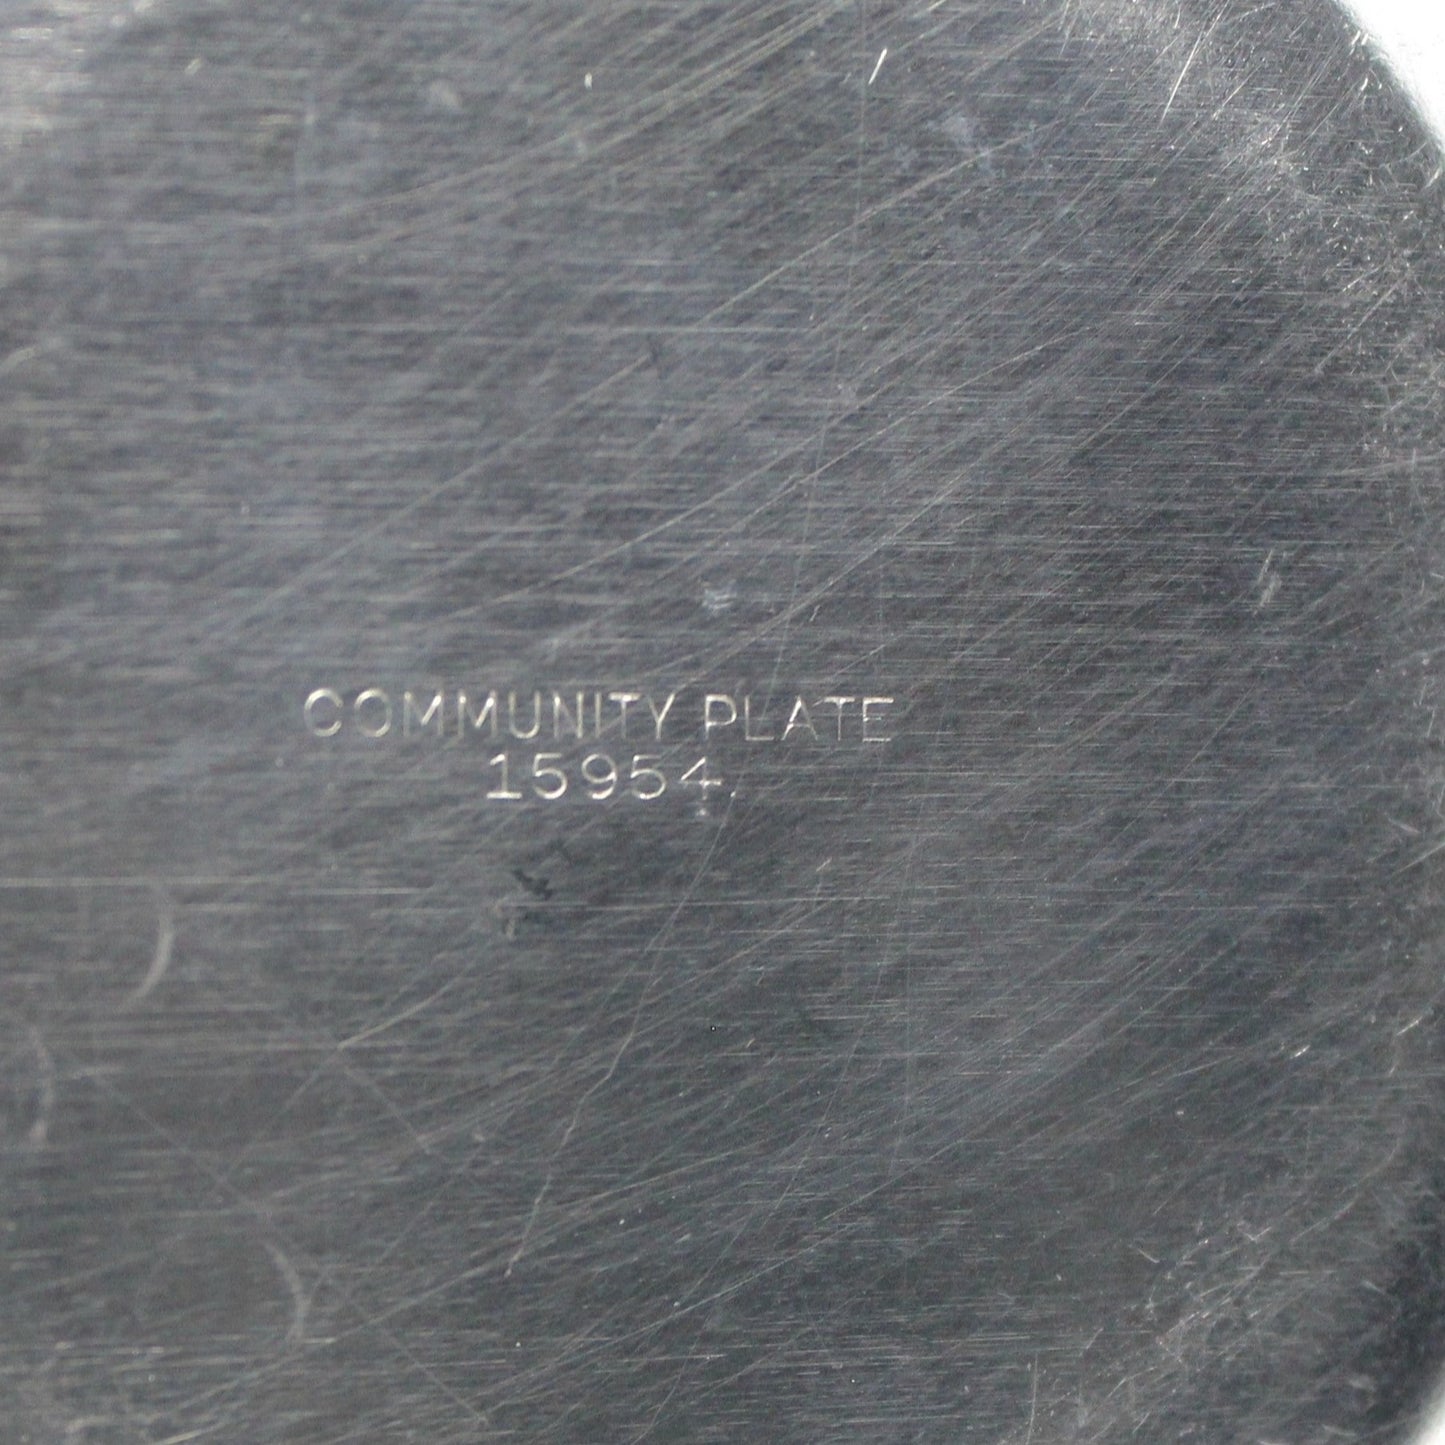 Porringer Bowl, Community Plate, Deauville Silverplate, Scrolled Handle, Vintage